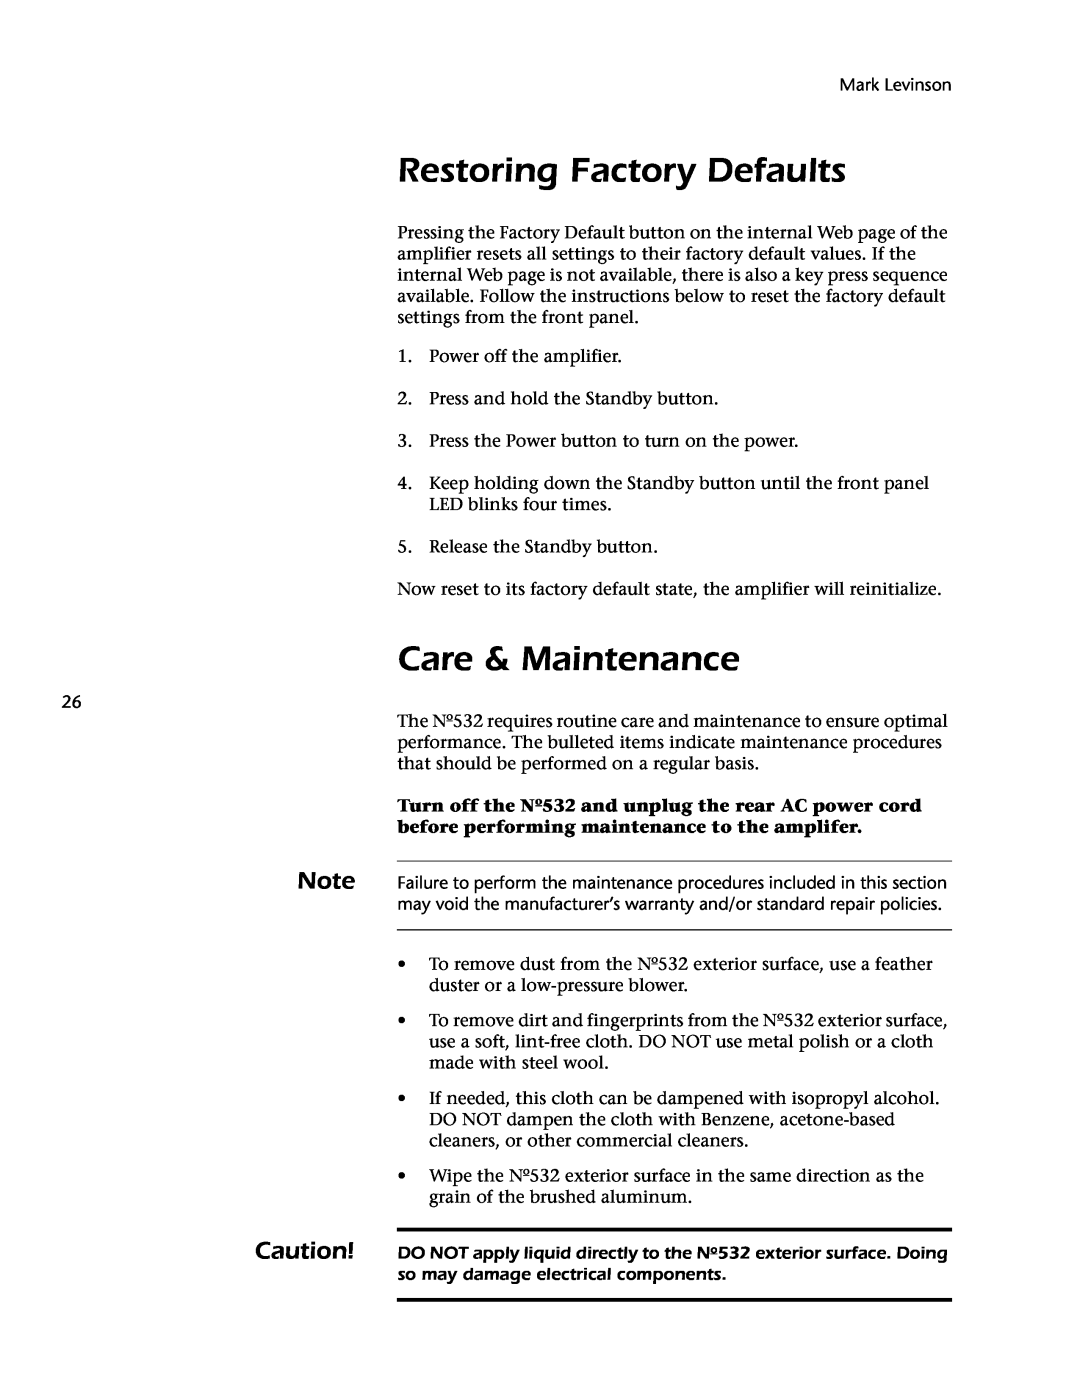 Mark Levinson 532 owner manual Restoring Factory Defaults, Care & Maintenance 